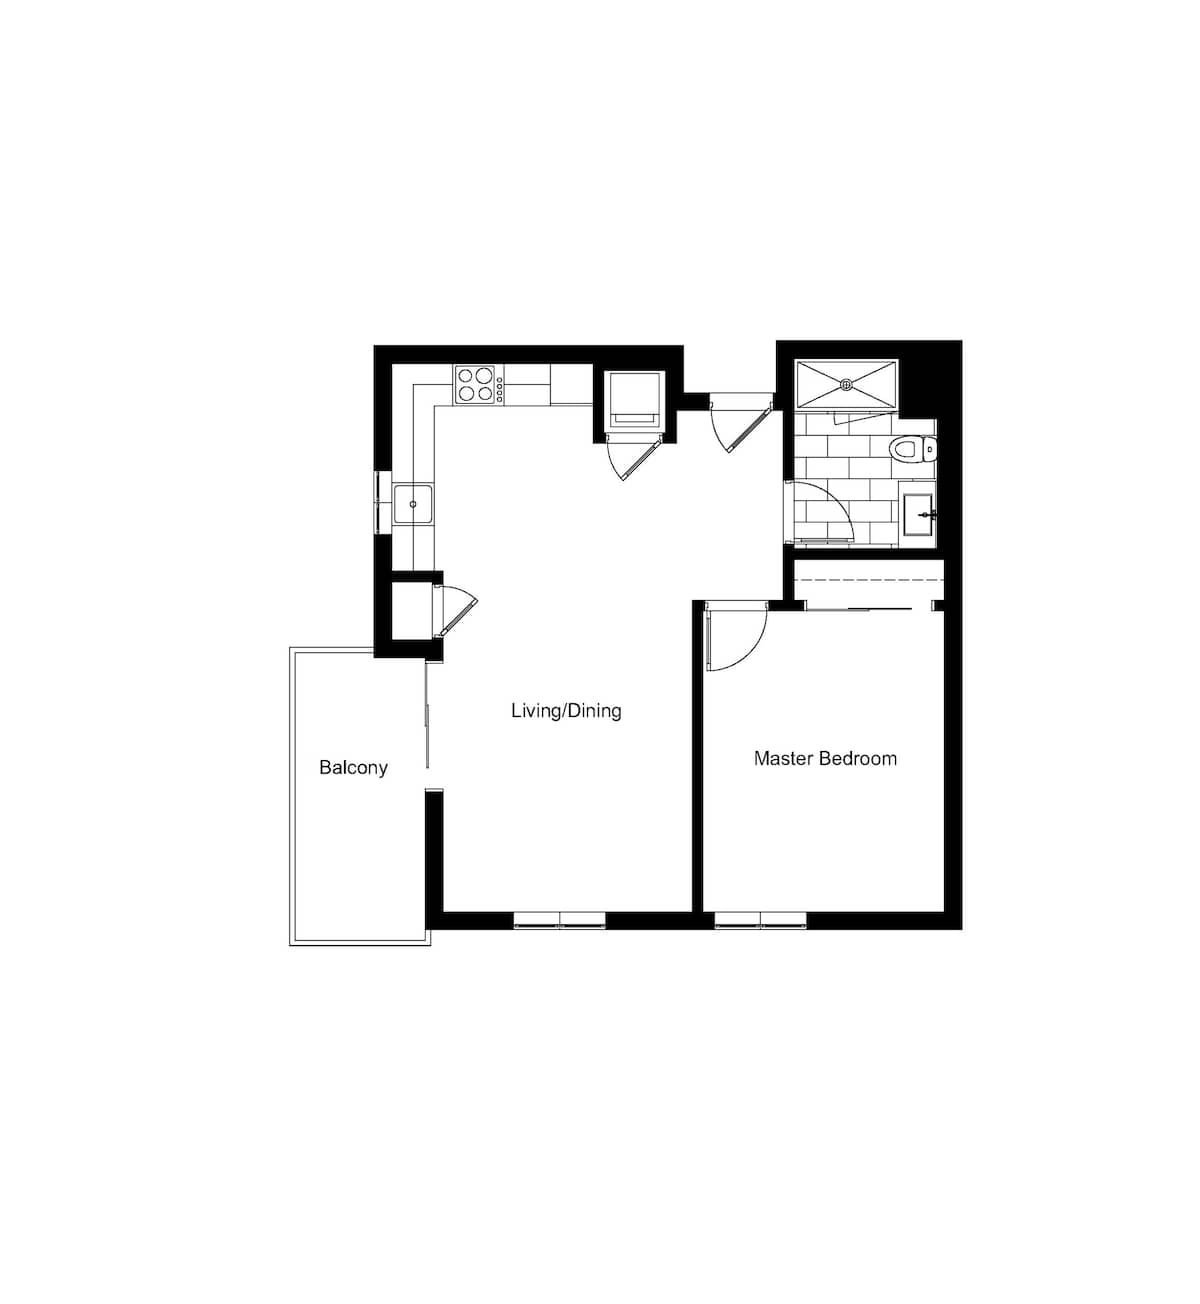 Floorplan diagram for HiFi, showing 1 bedroom